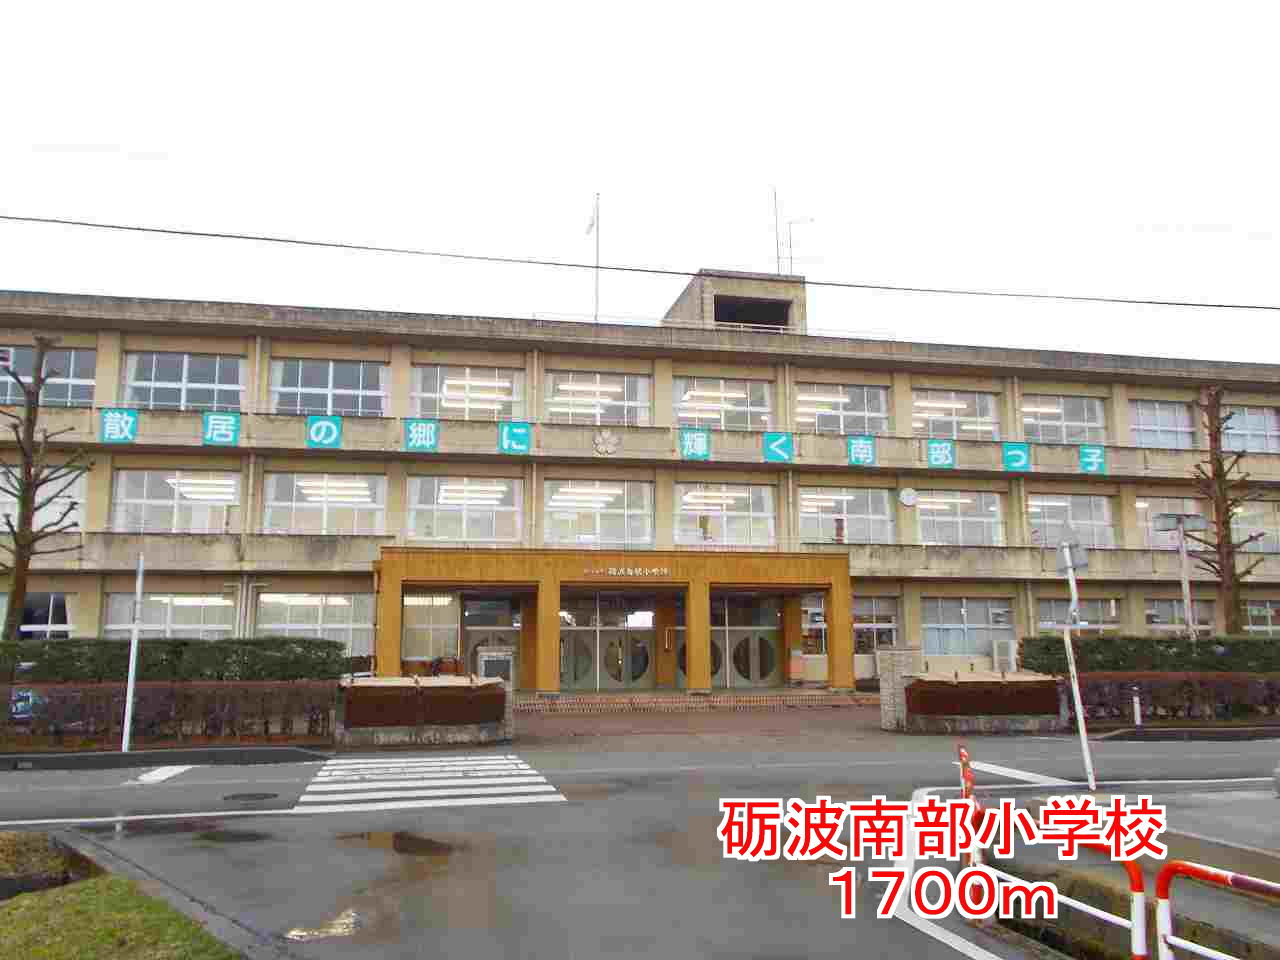 Primary school. Tonami to south elementary school (elementary school) 1700m